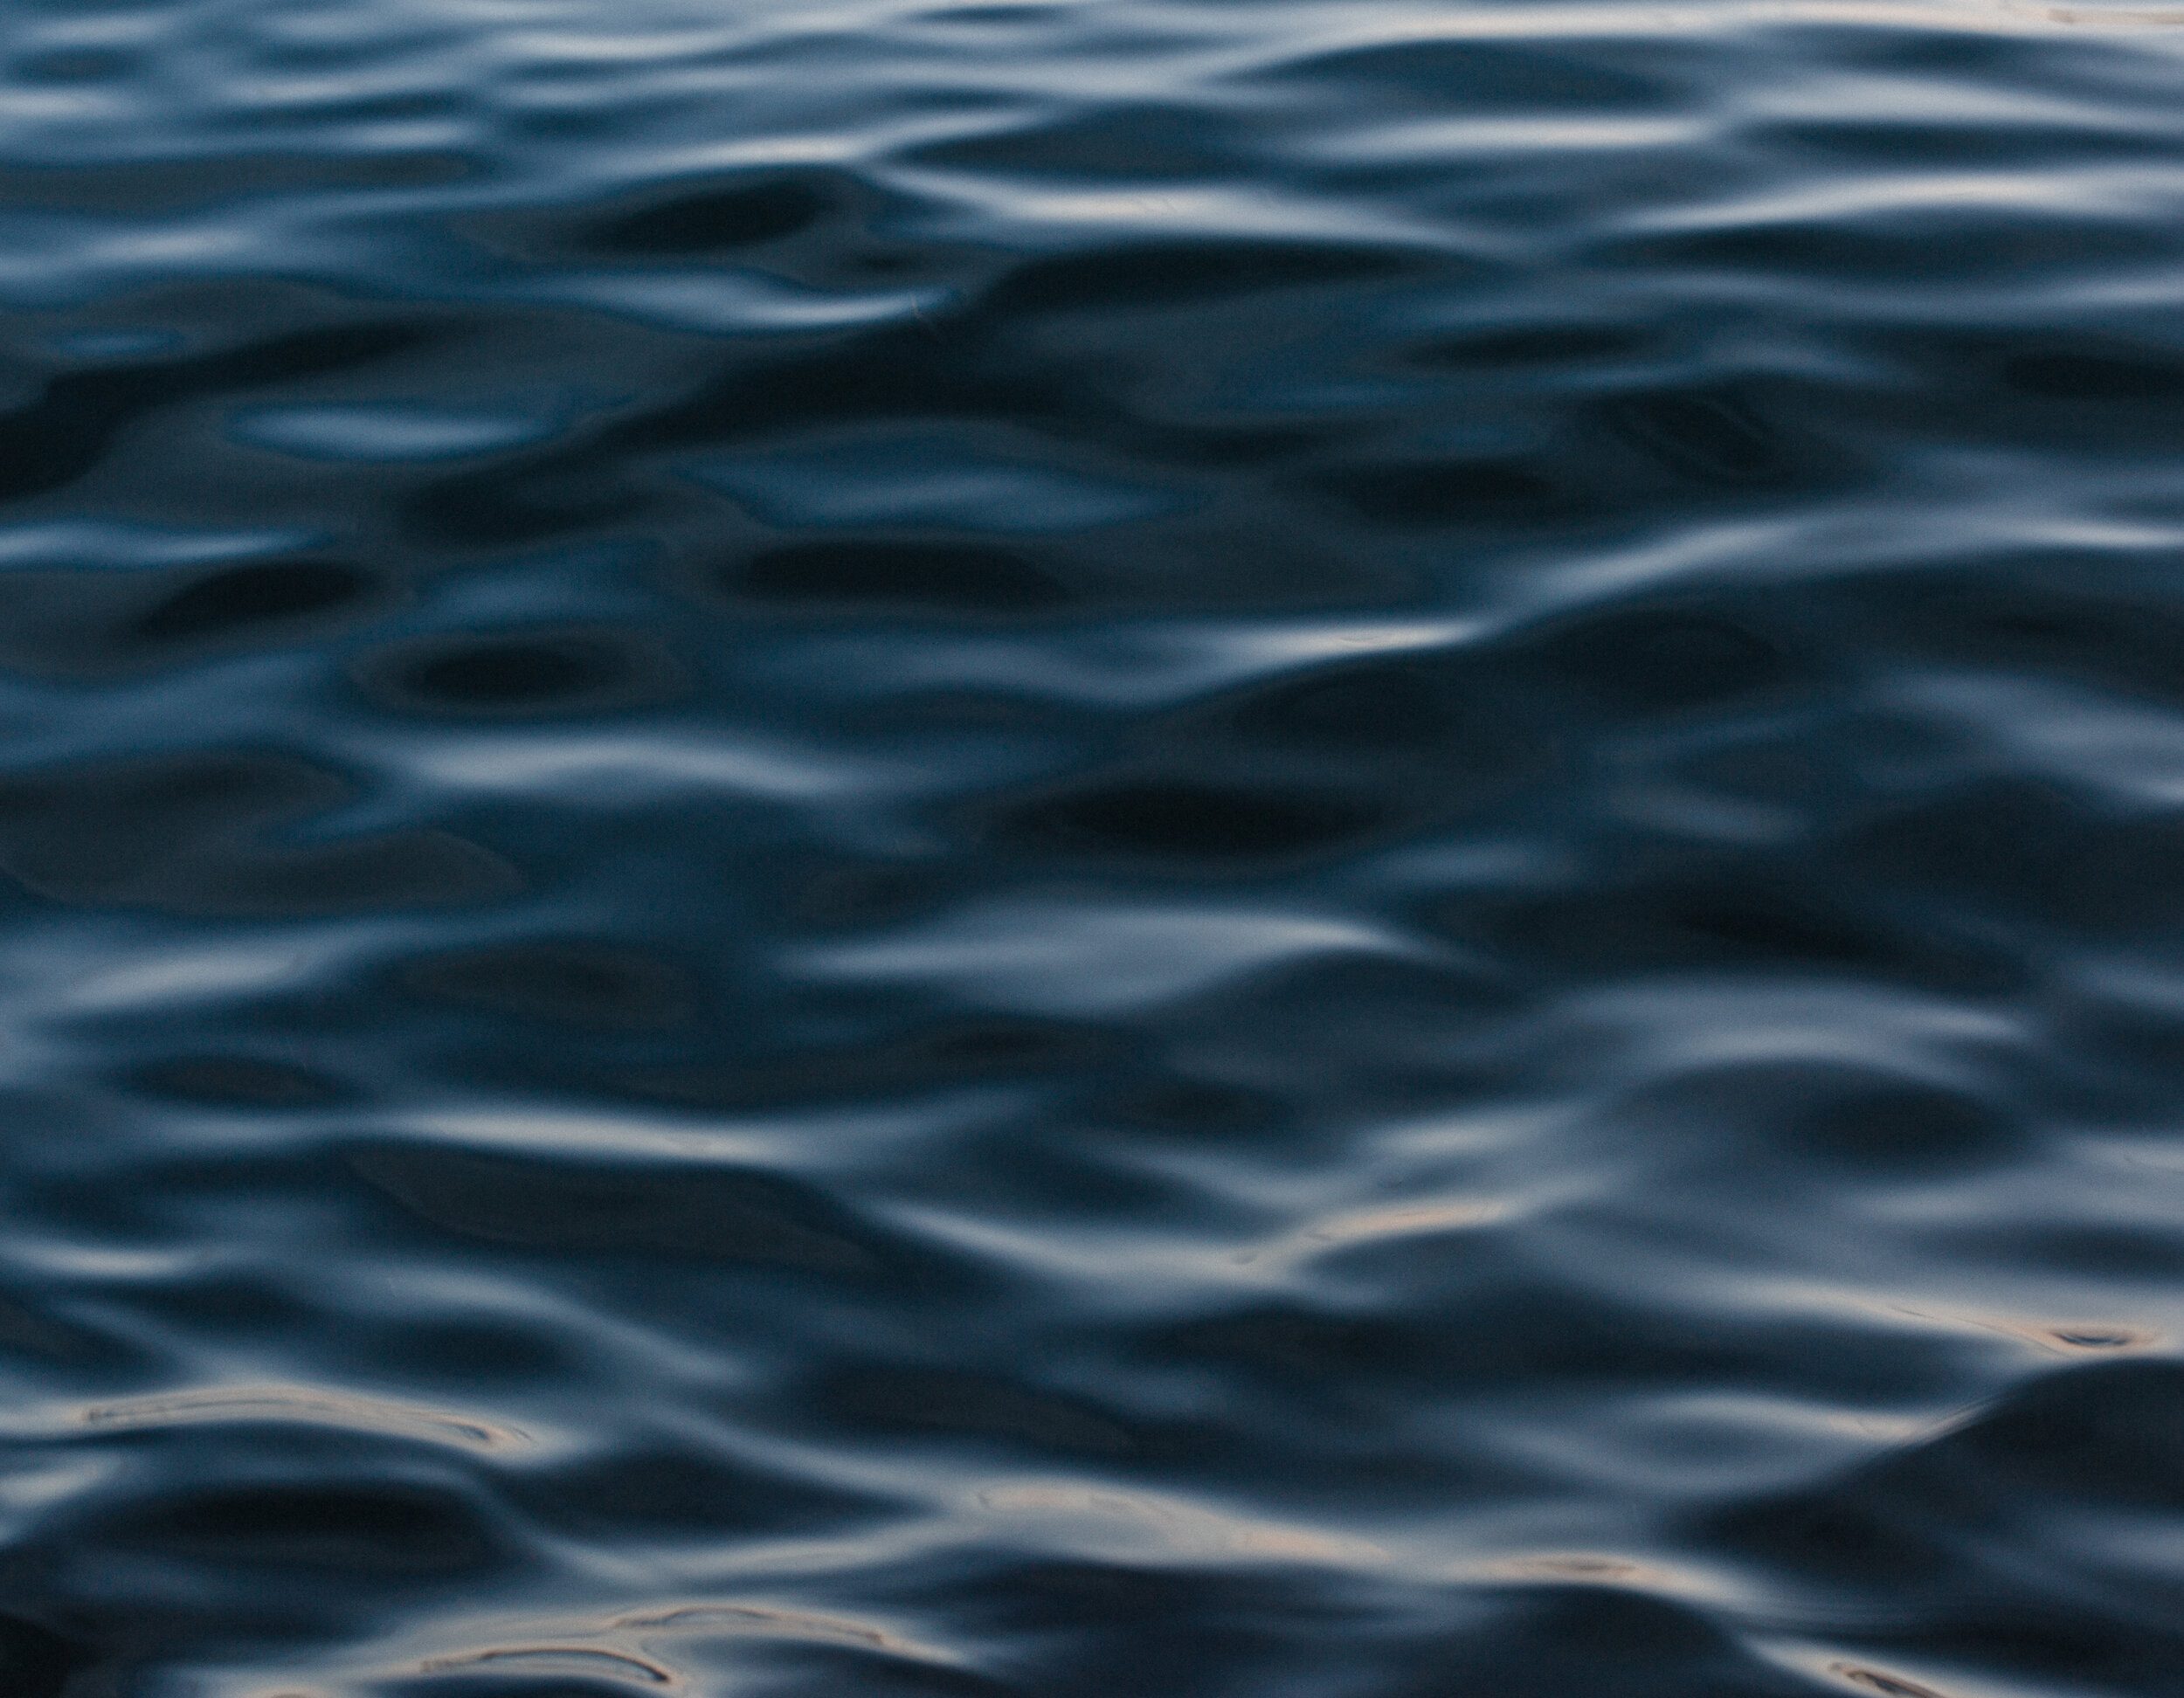 Water texture close up.jpg